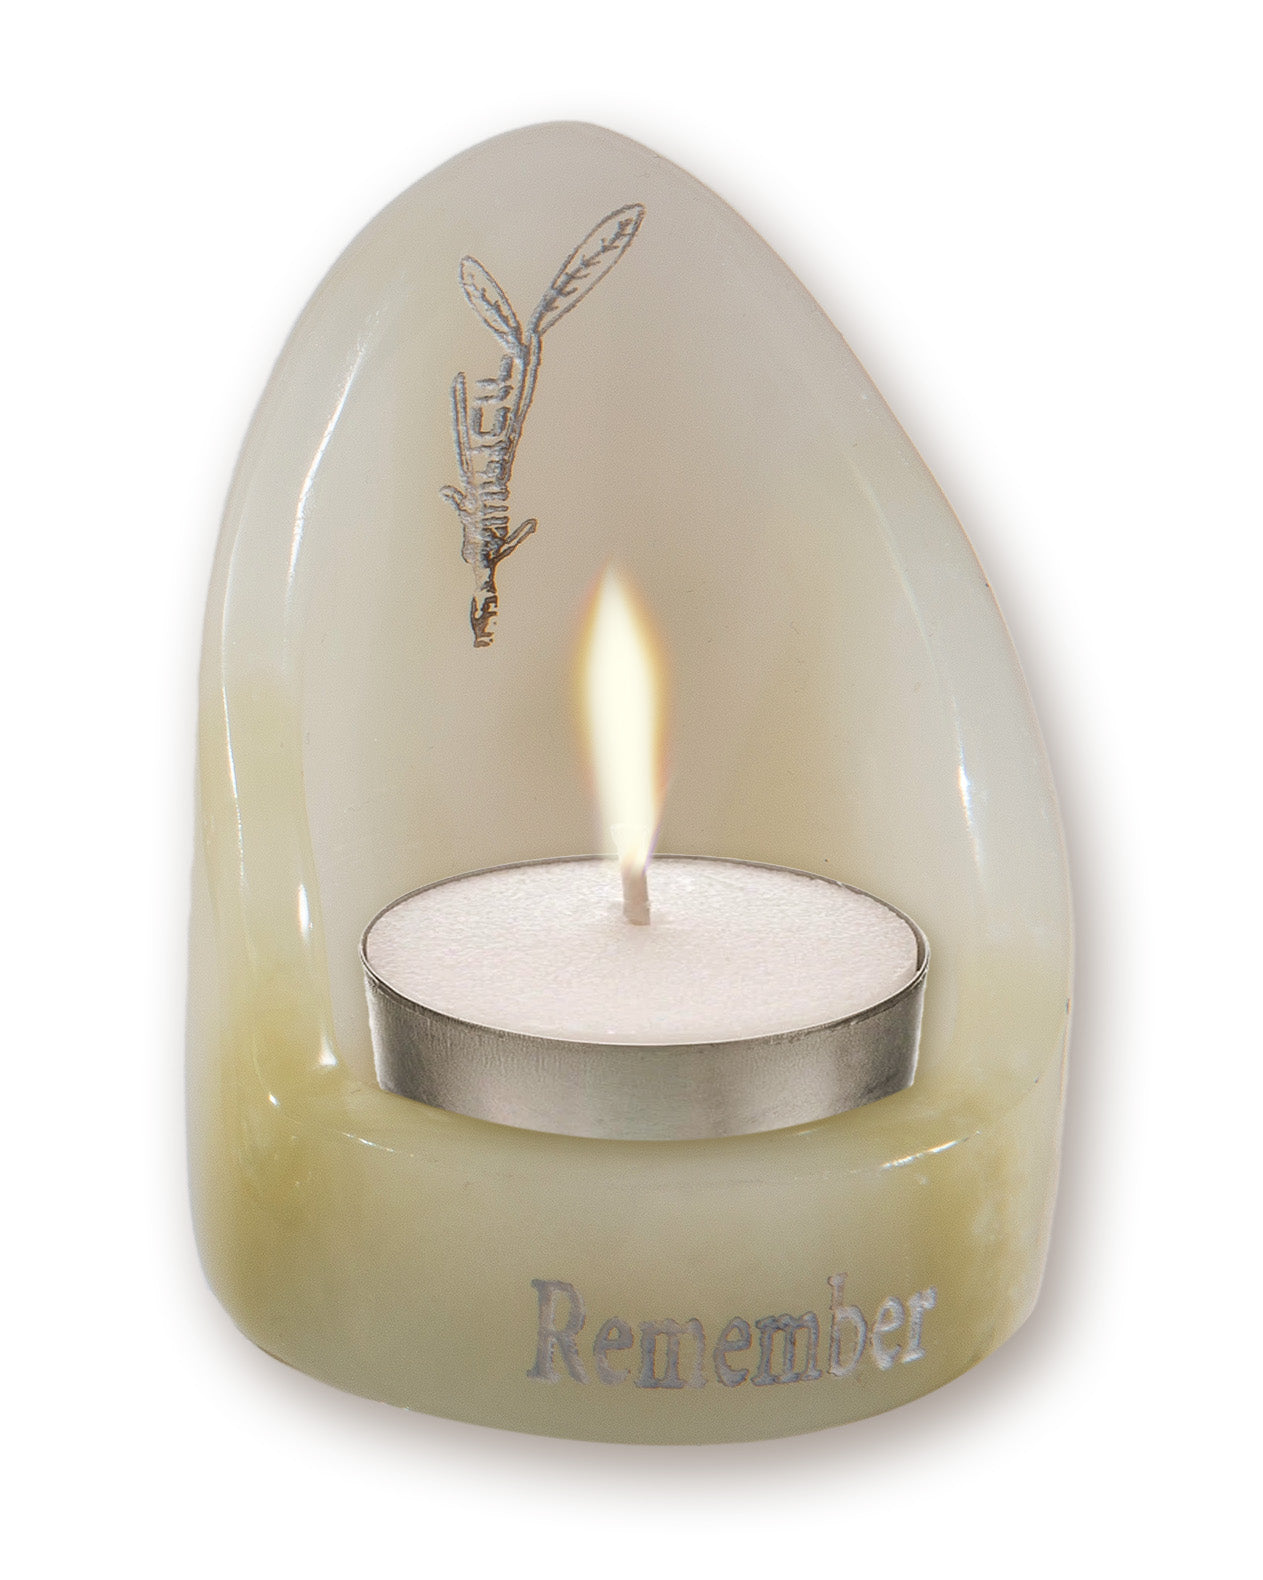 Alabaster Holocaust Remembrance Tealight Candle Holder